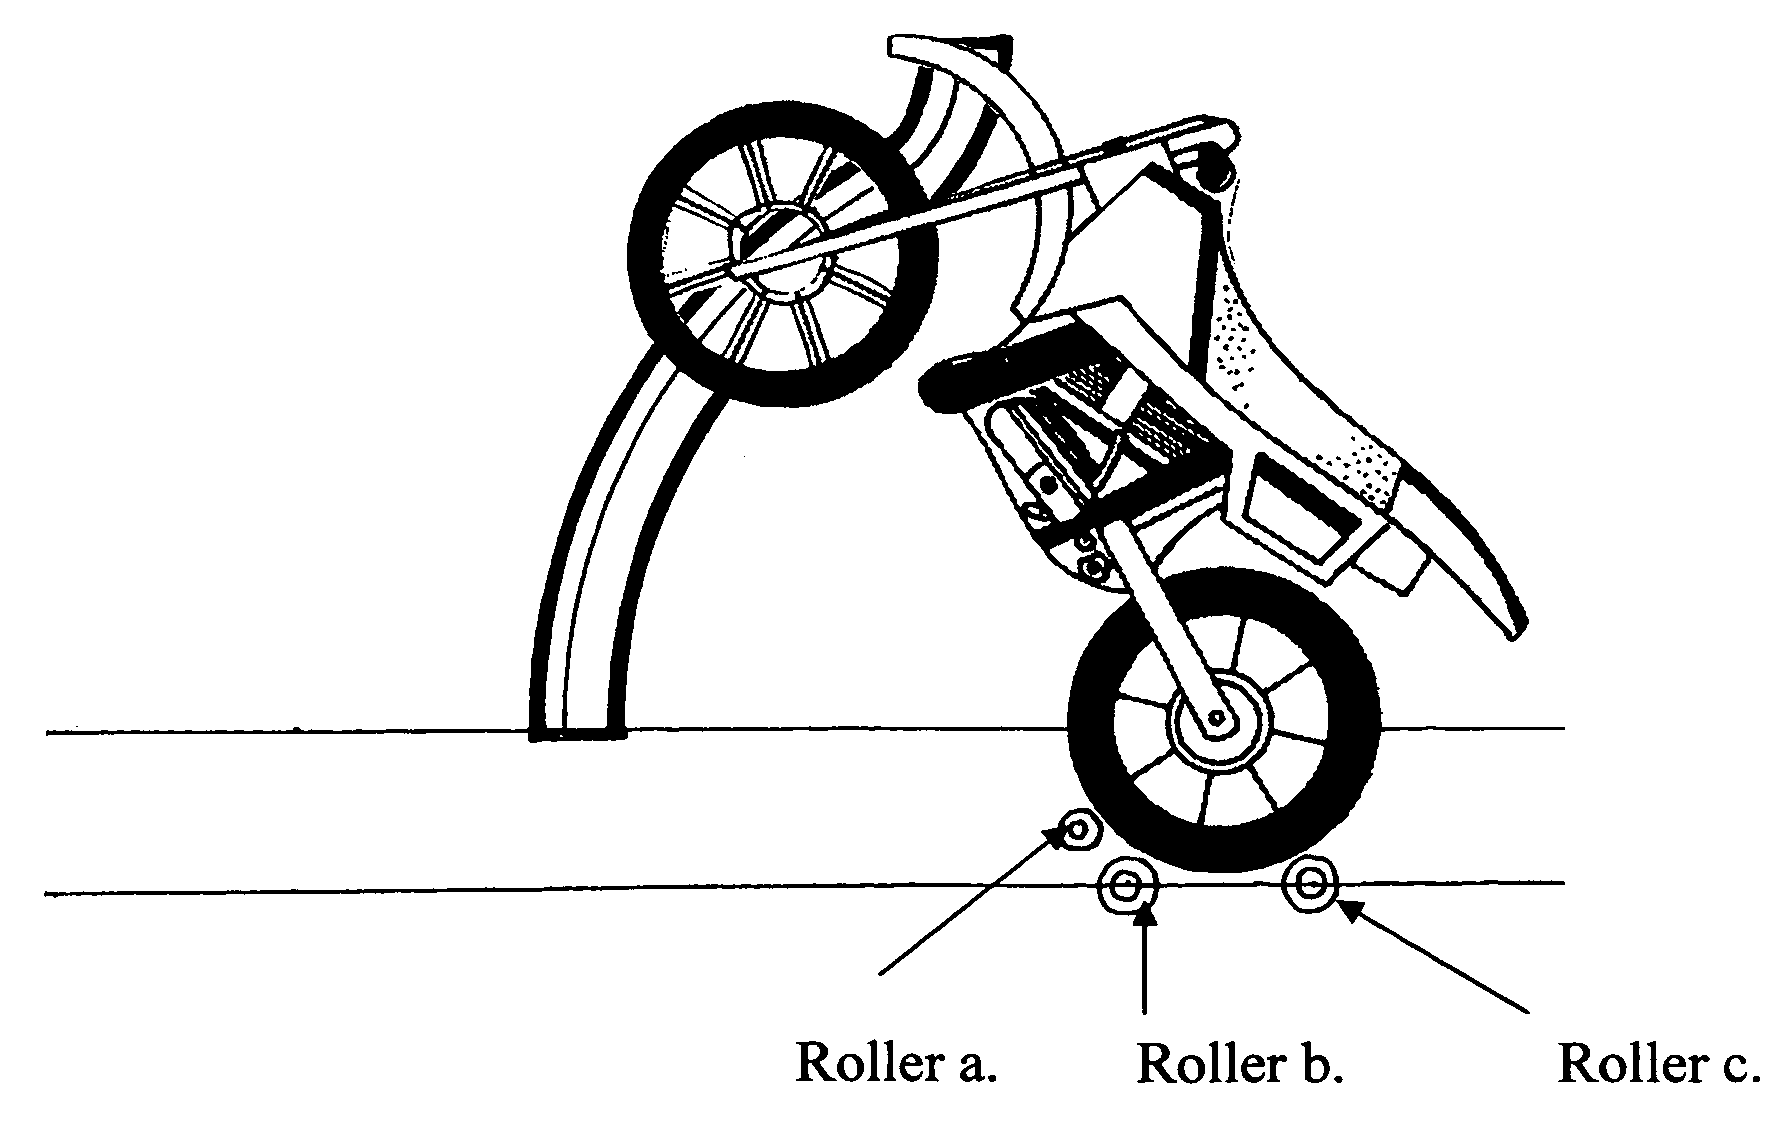 Motorcycle wheelie training device